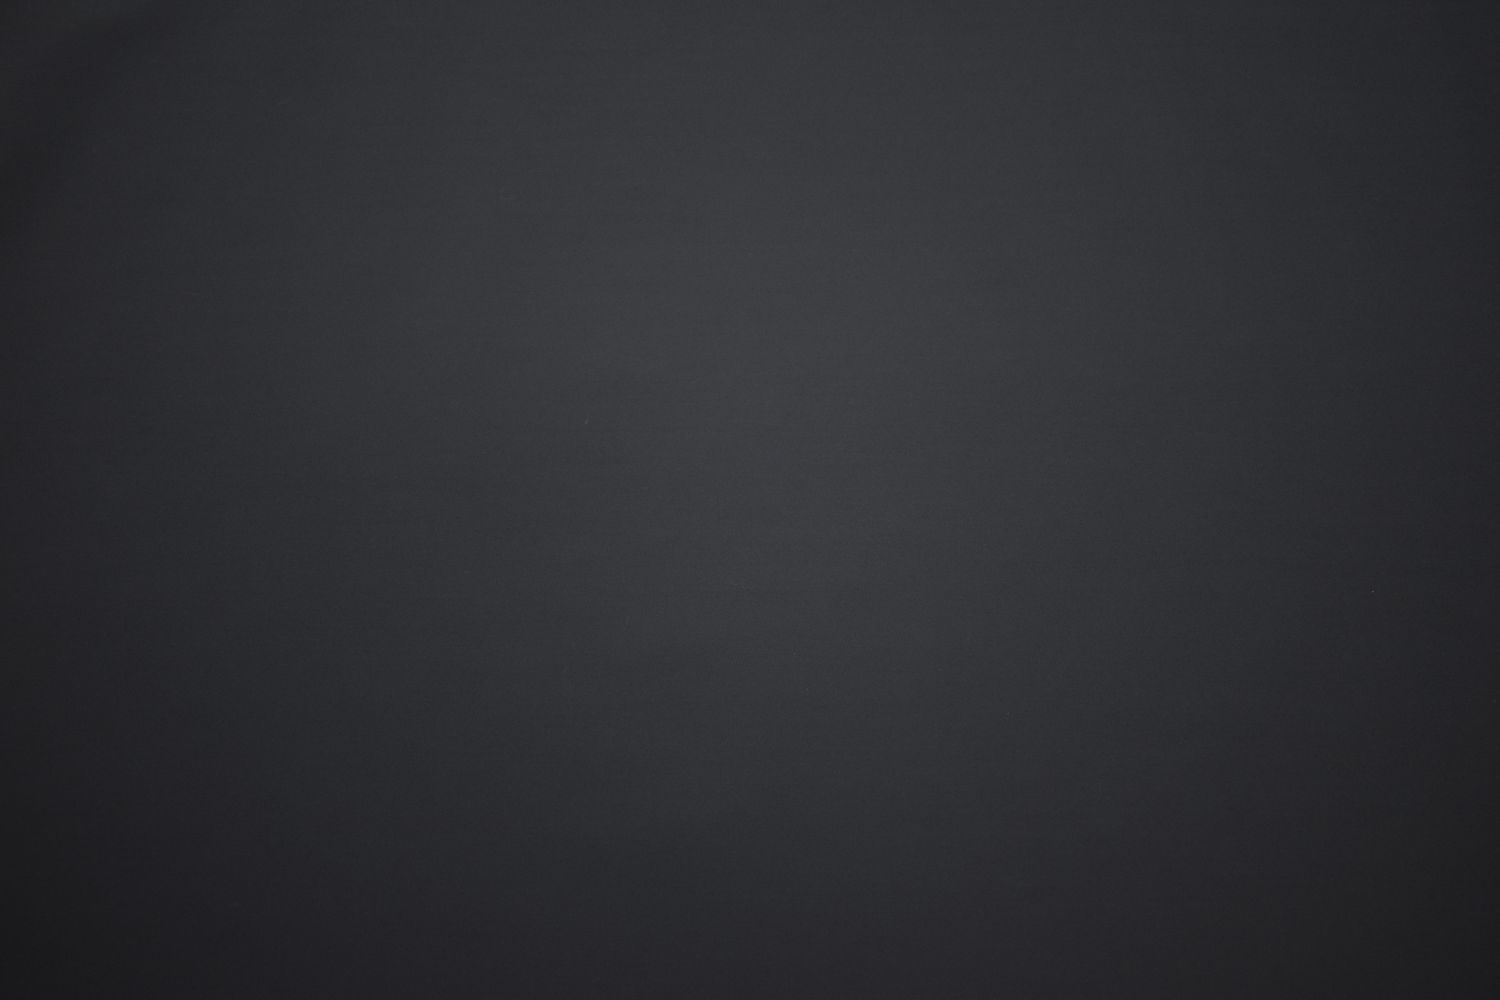 Бифлекс матовый серого цвета W-125036